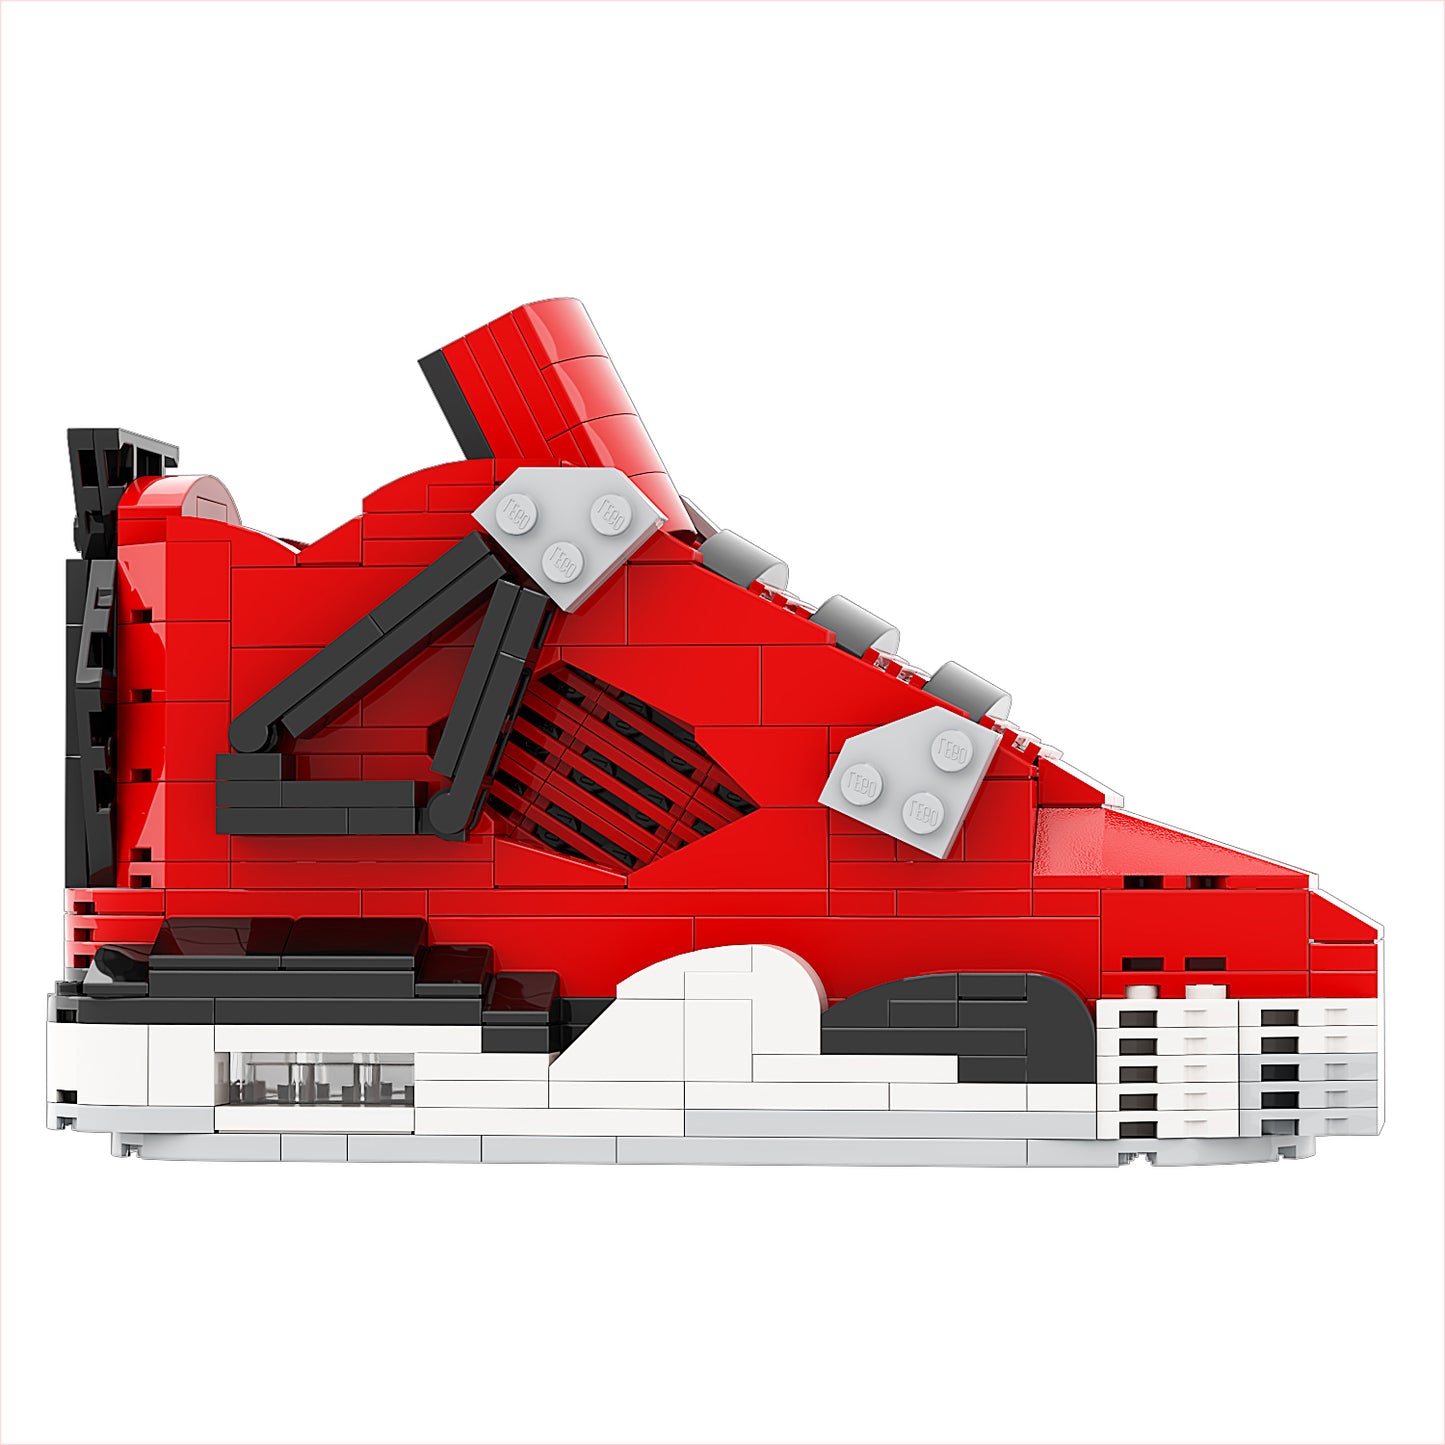 REGULAR AJ4 "Toro" Sneaker Bricks Sneaker with Mini Figure